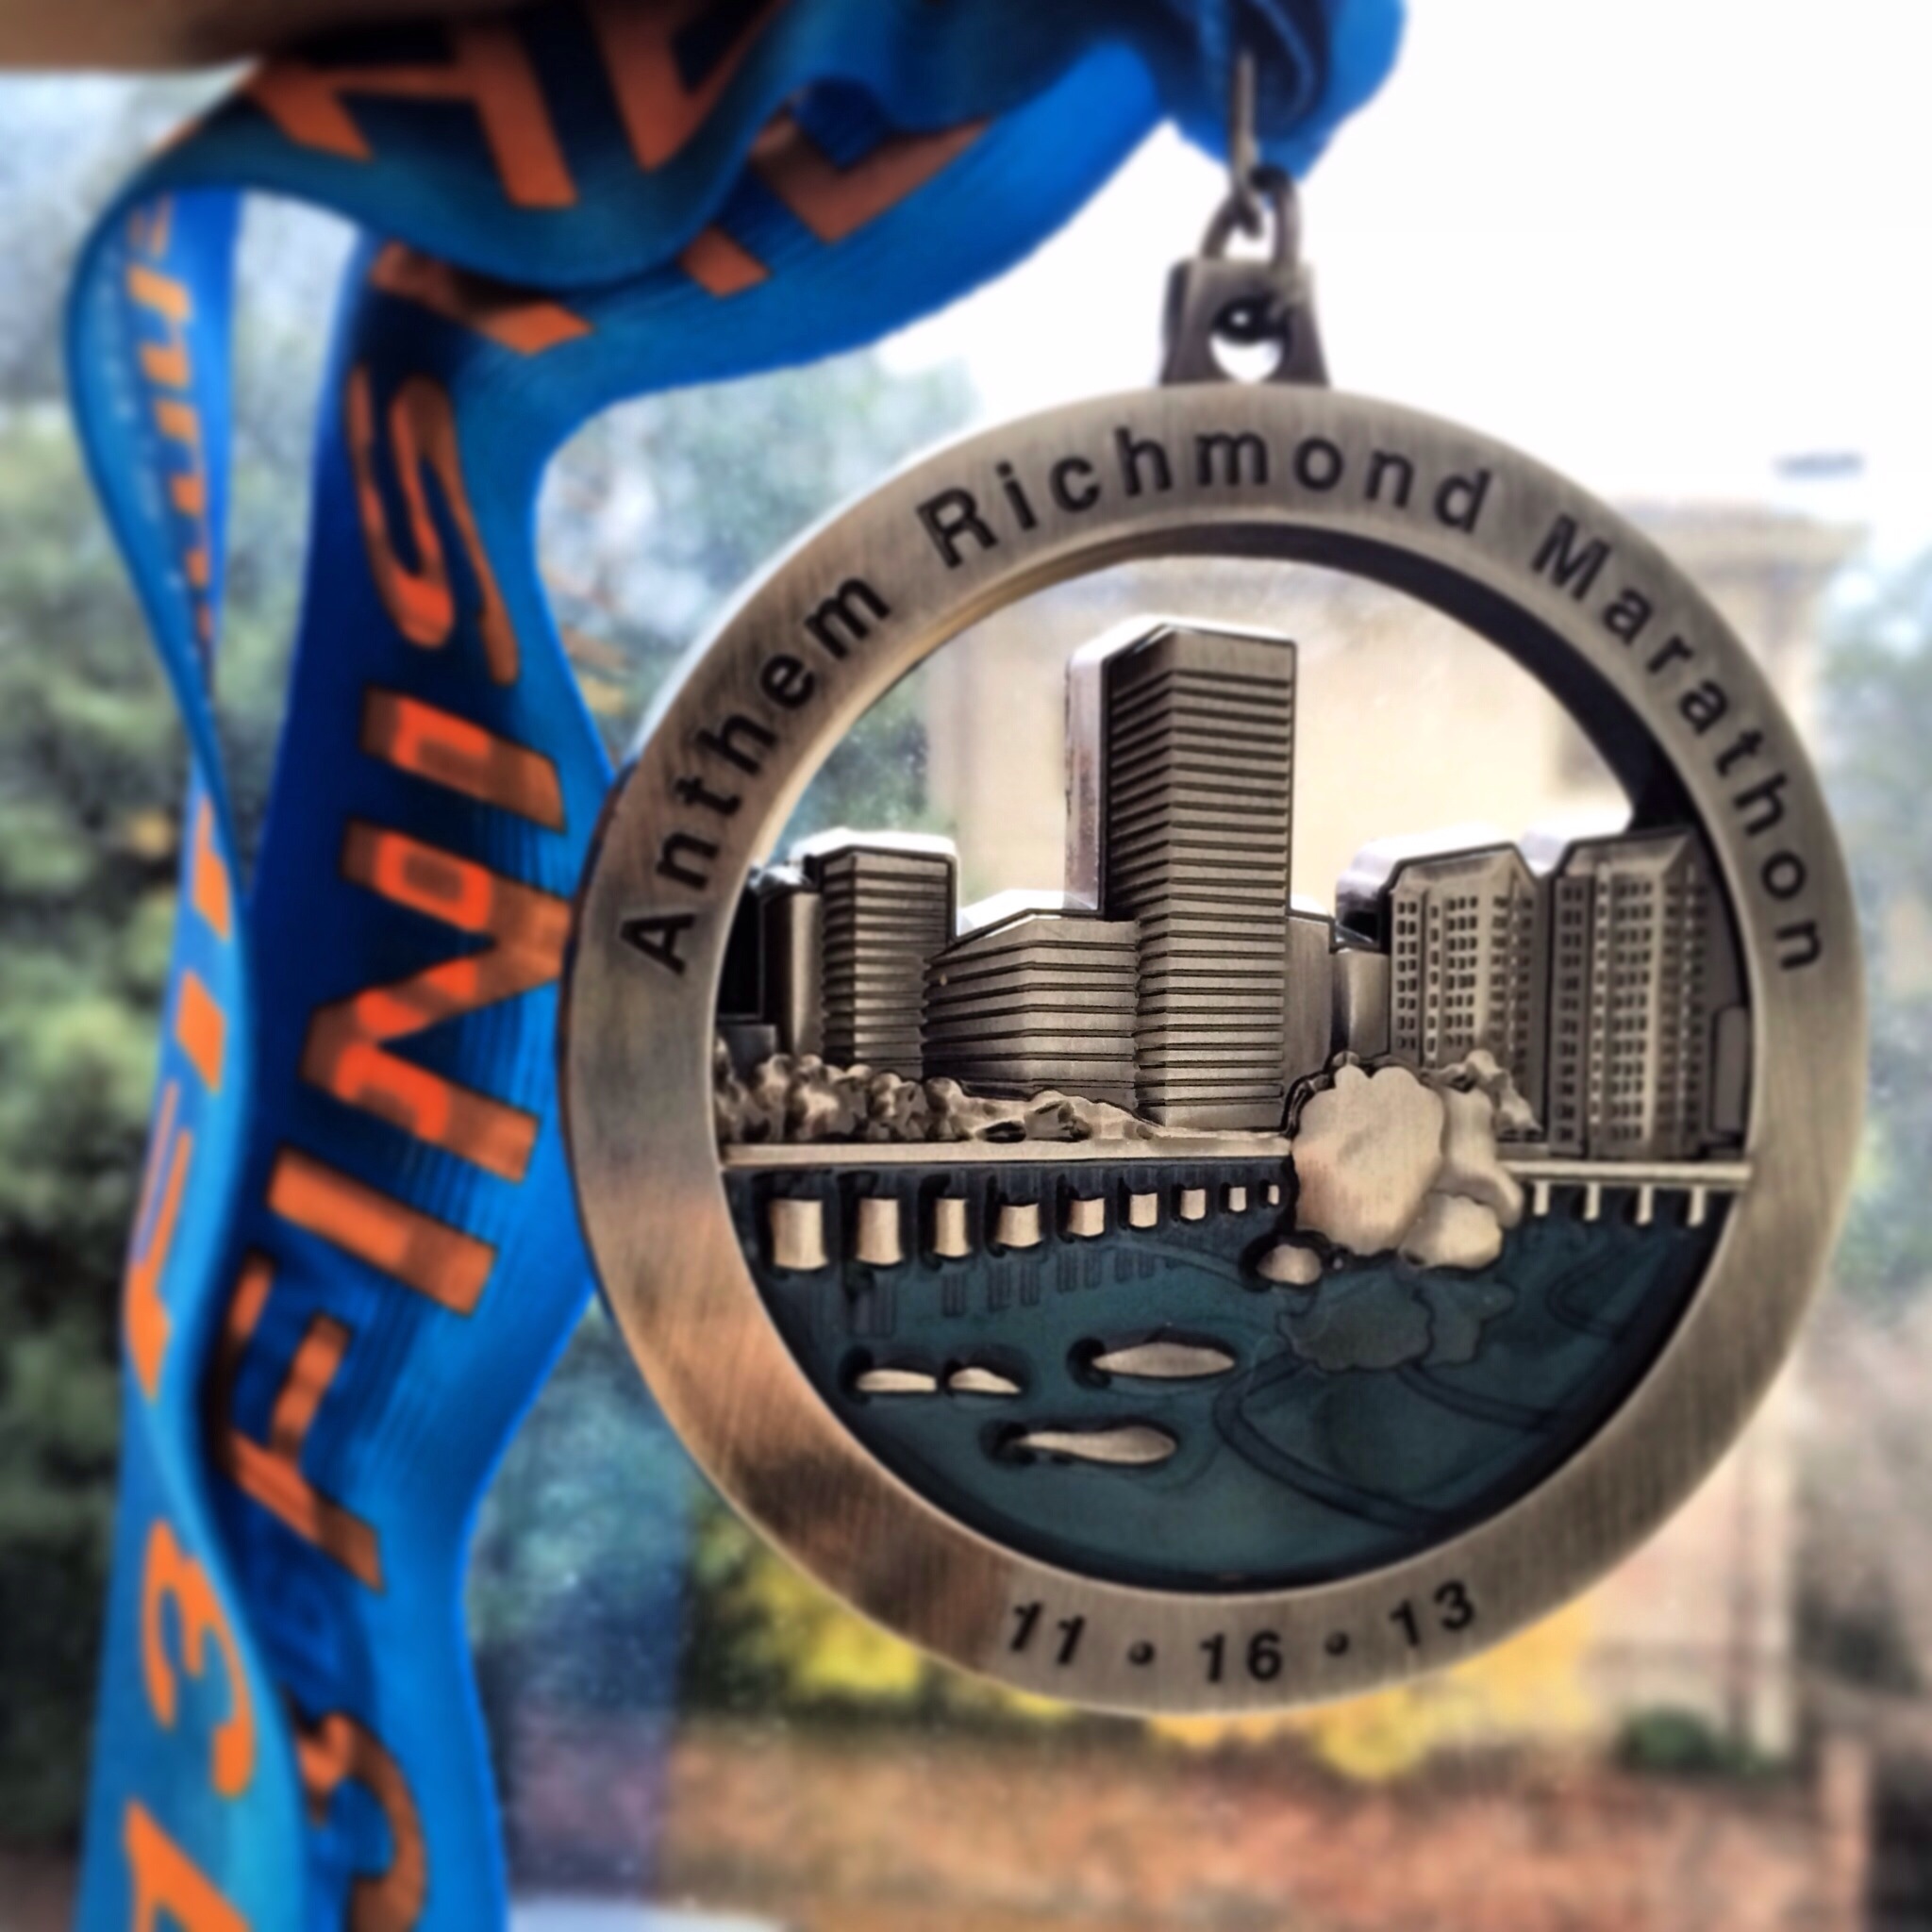 Richmond Marathon Medal